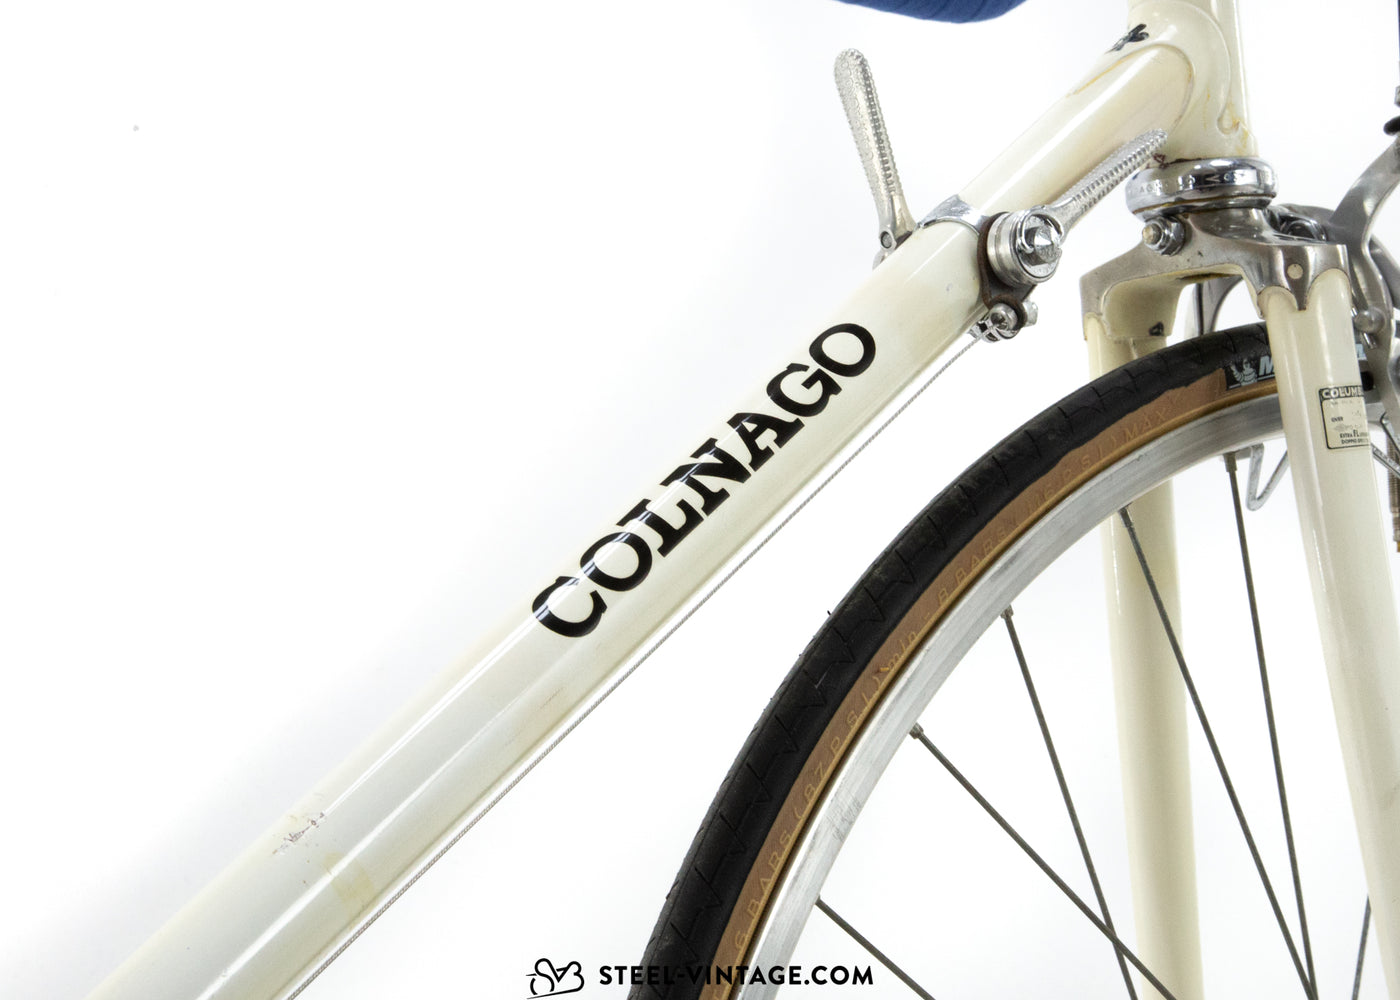 Colnago Super Road Bicycle 1971